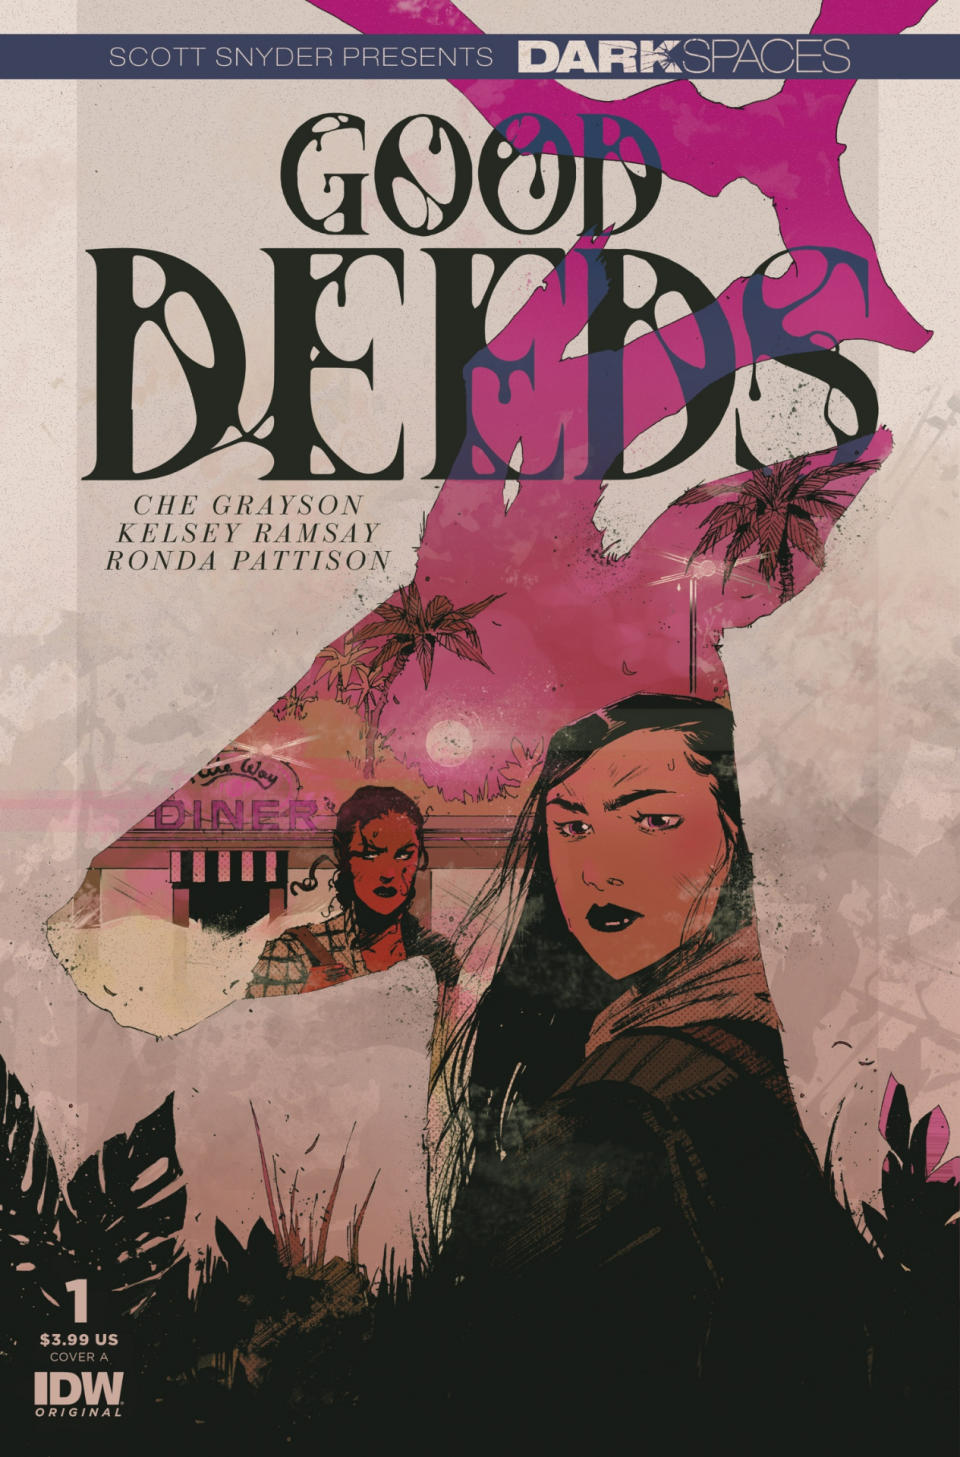 Dark Forces: Good Deeds #1 cover art